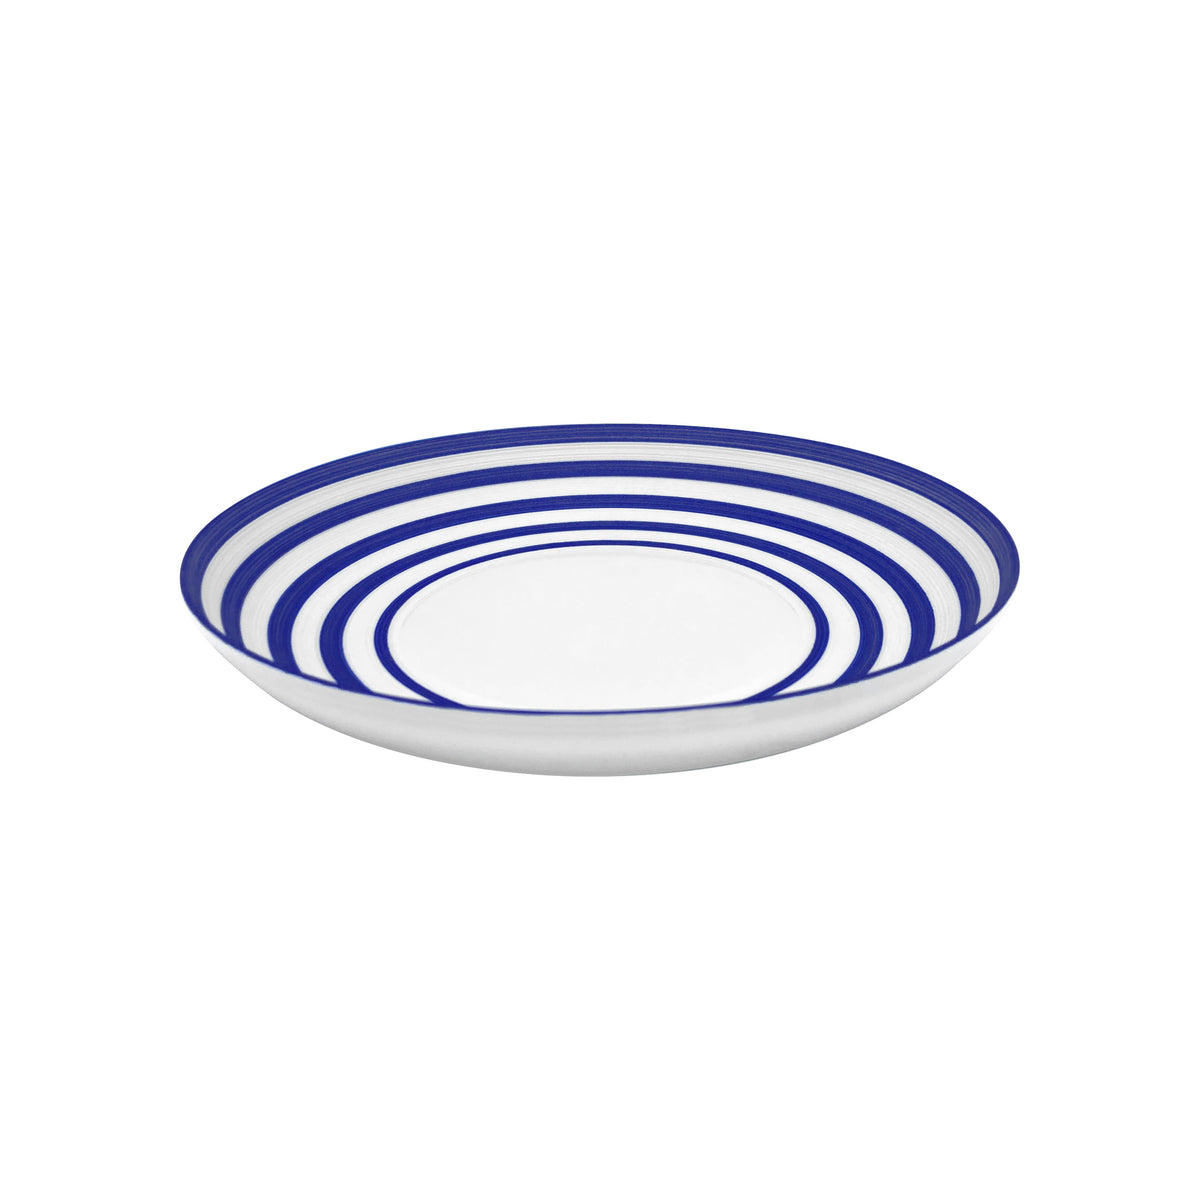 HEMISPHERE Striped Royal Blue - Pasta plate MM